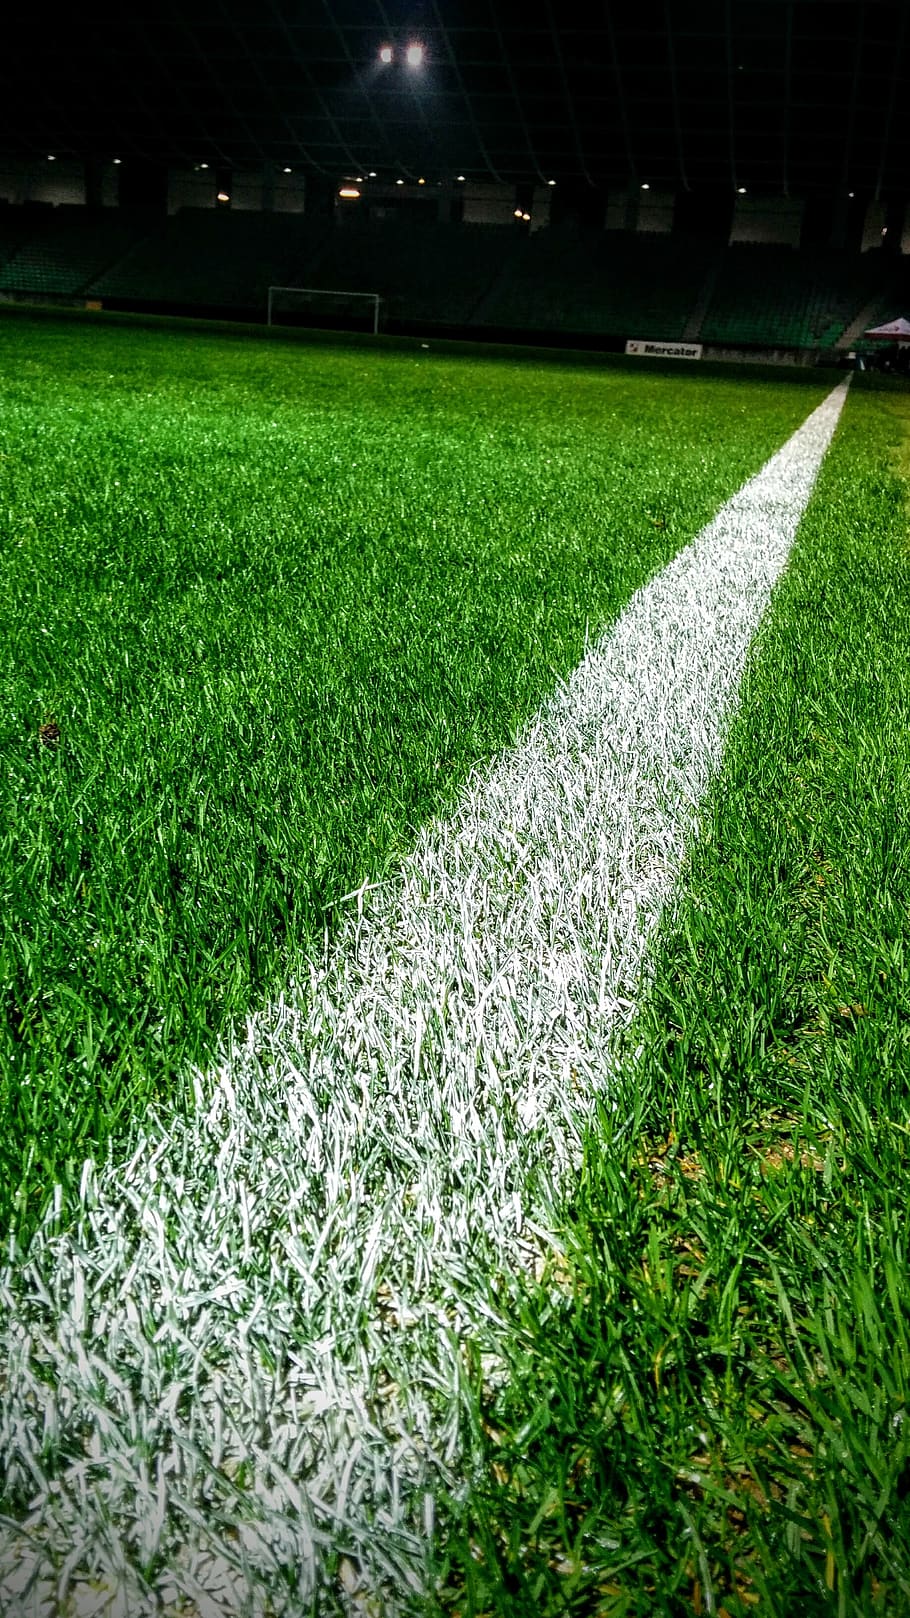 garis, sepak bola, lapangan, lapangan sepak bola, putih, rumput, olahraga, stadion sepak bola, lapangan hijau, warna hijau